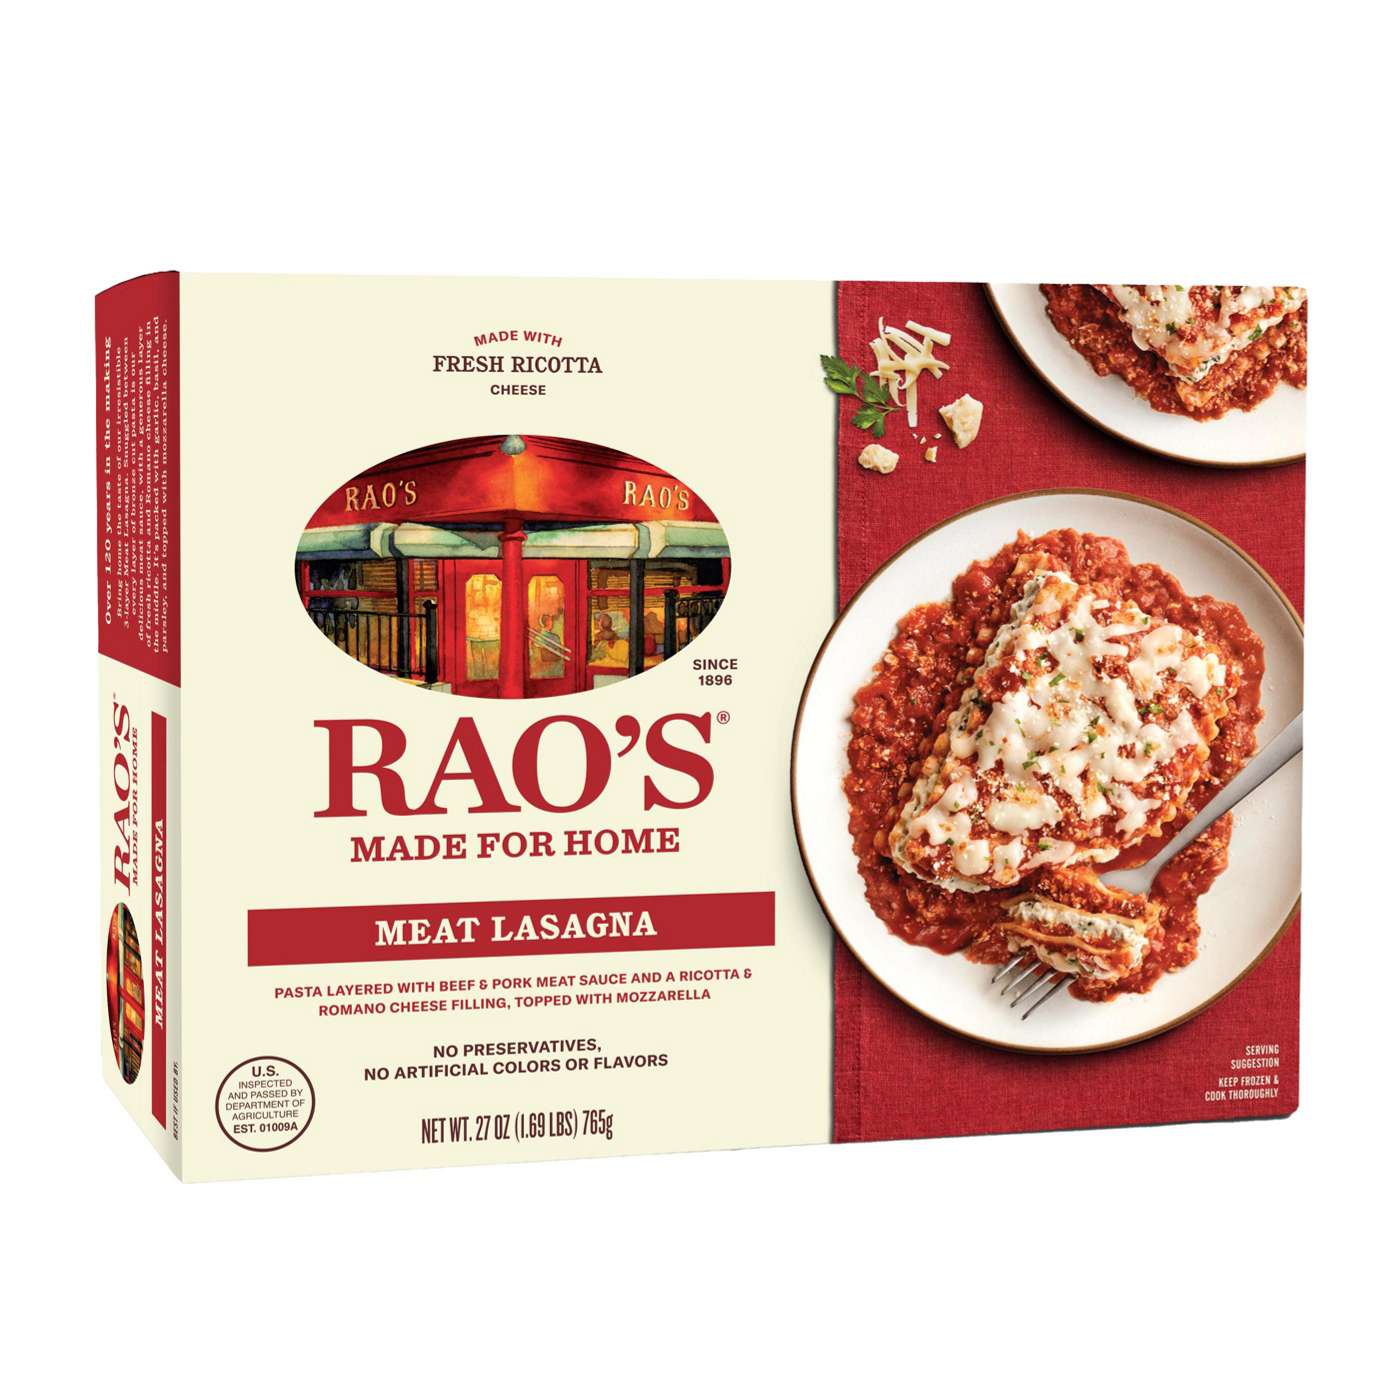 Rao's Meat Lasagna Frozen Meal; image 1 of 2